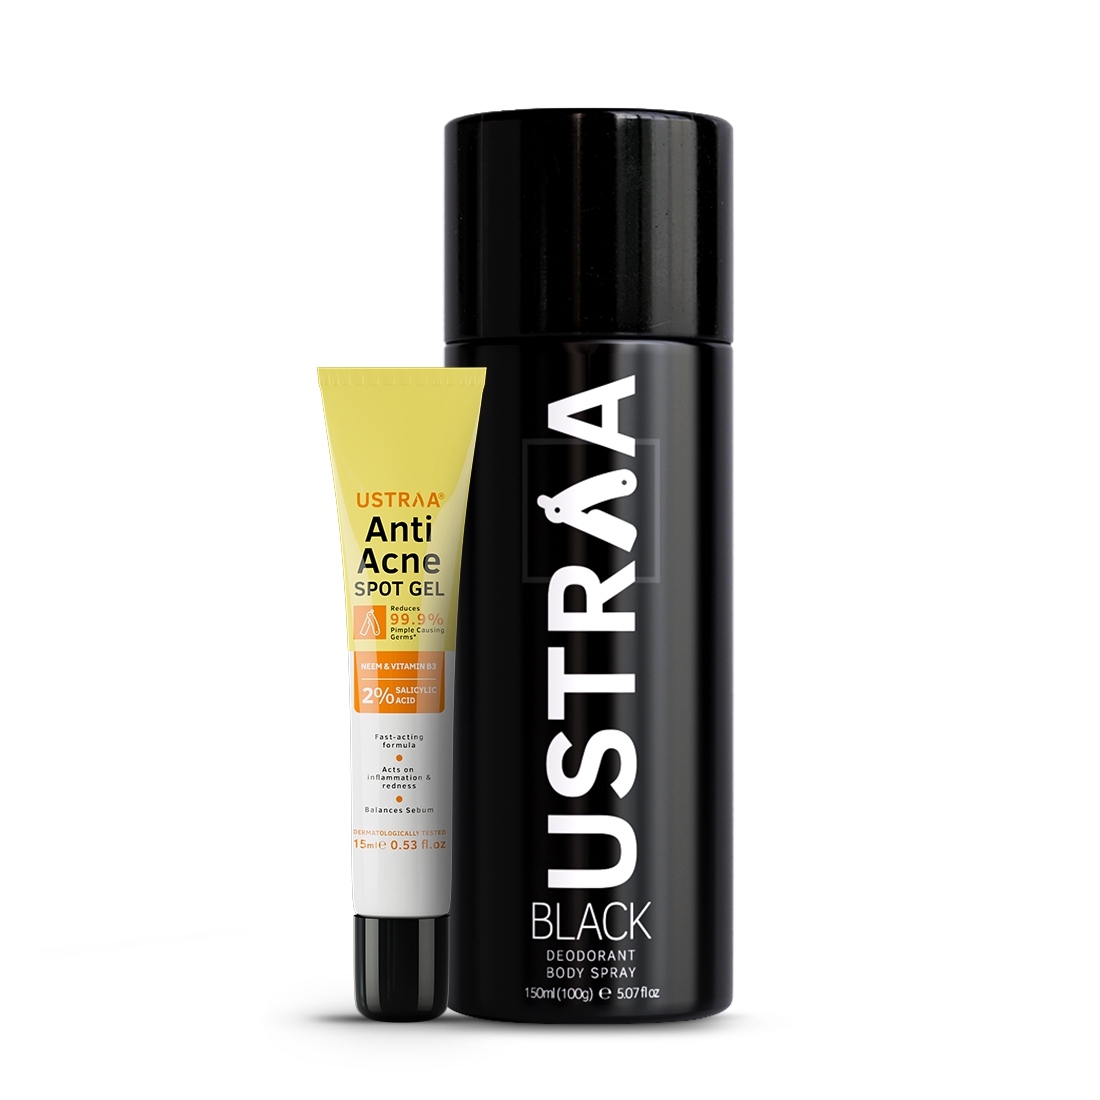 Ustraa Anti Acne Spot Gel - 15ml & BLACK Deodorant Body Spray - 150ml